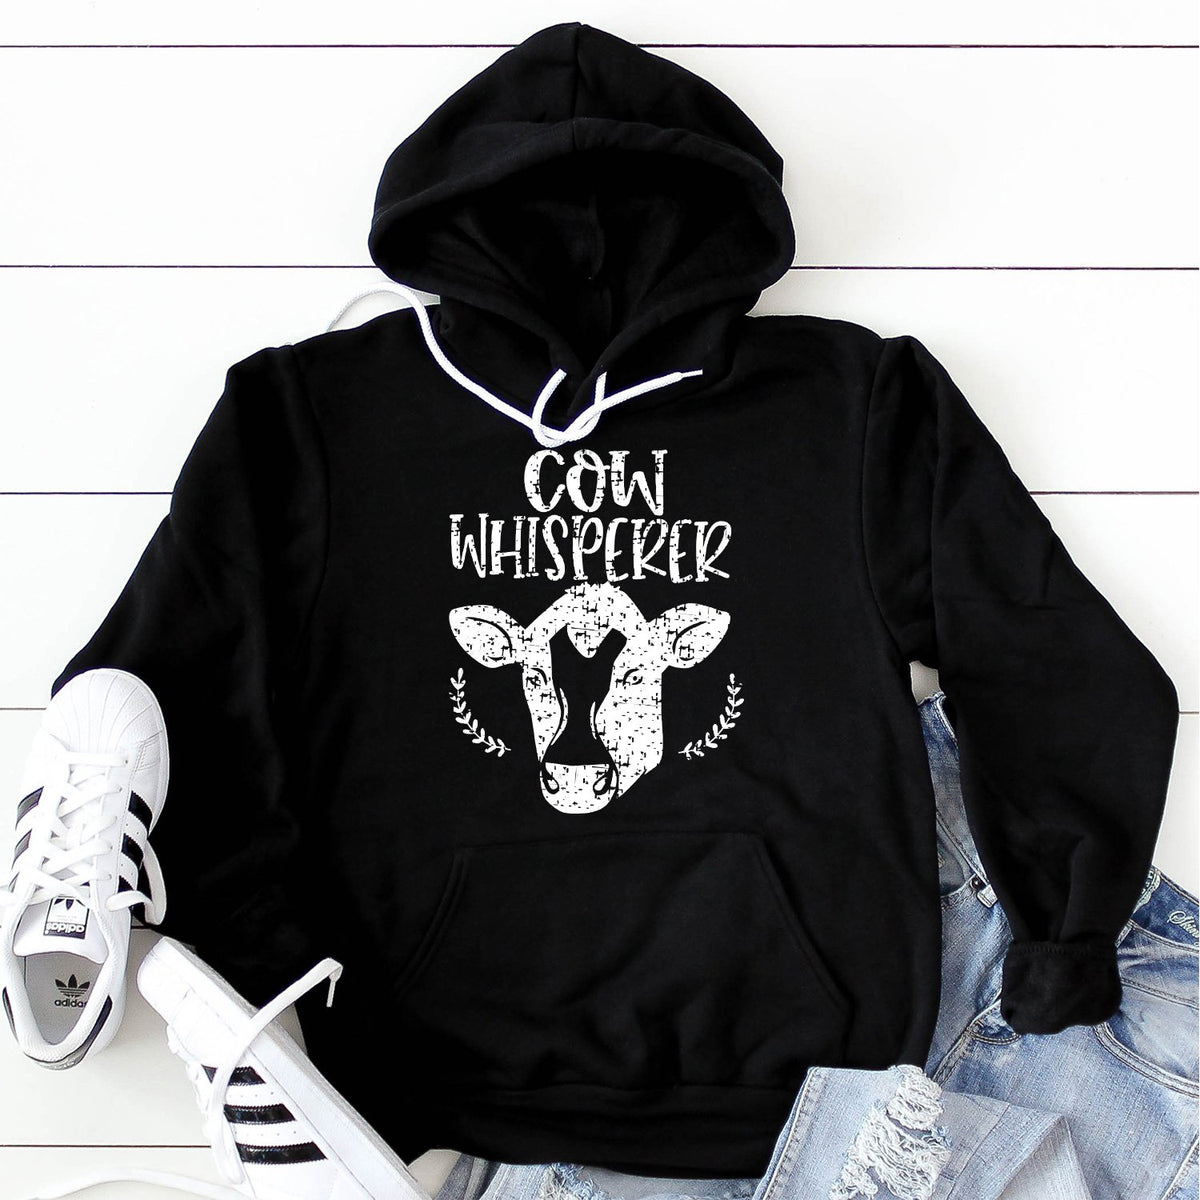 Cow Whisperer - Hoodie Sweatshirt